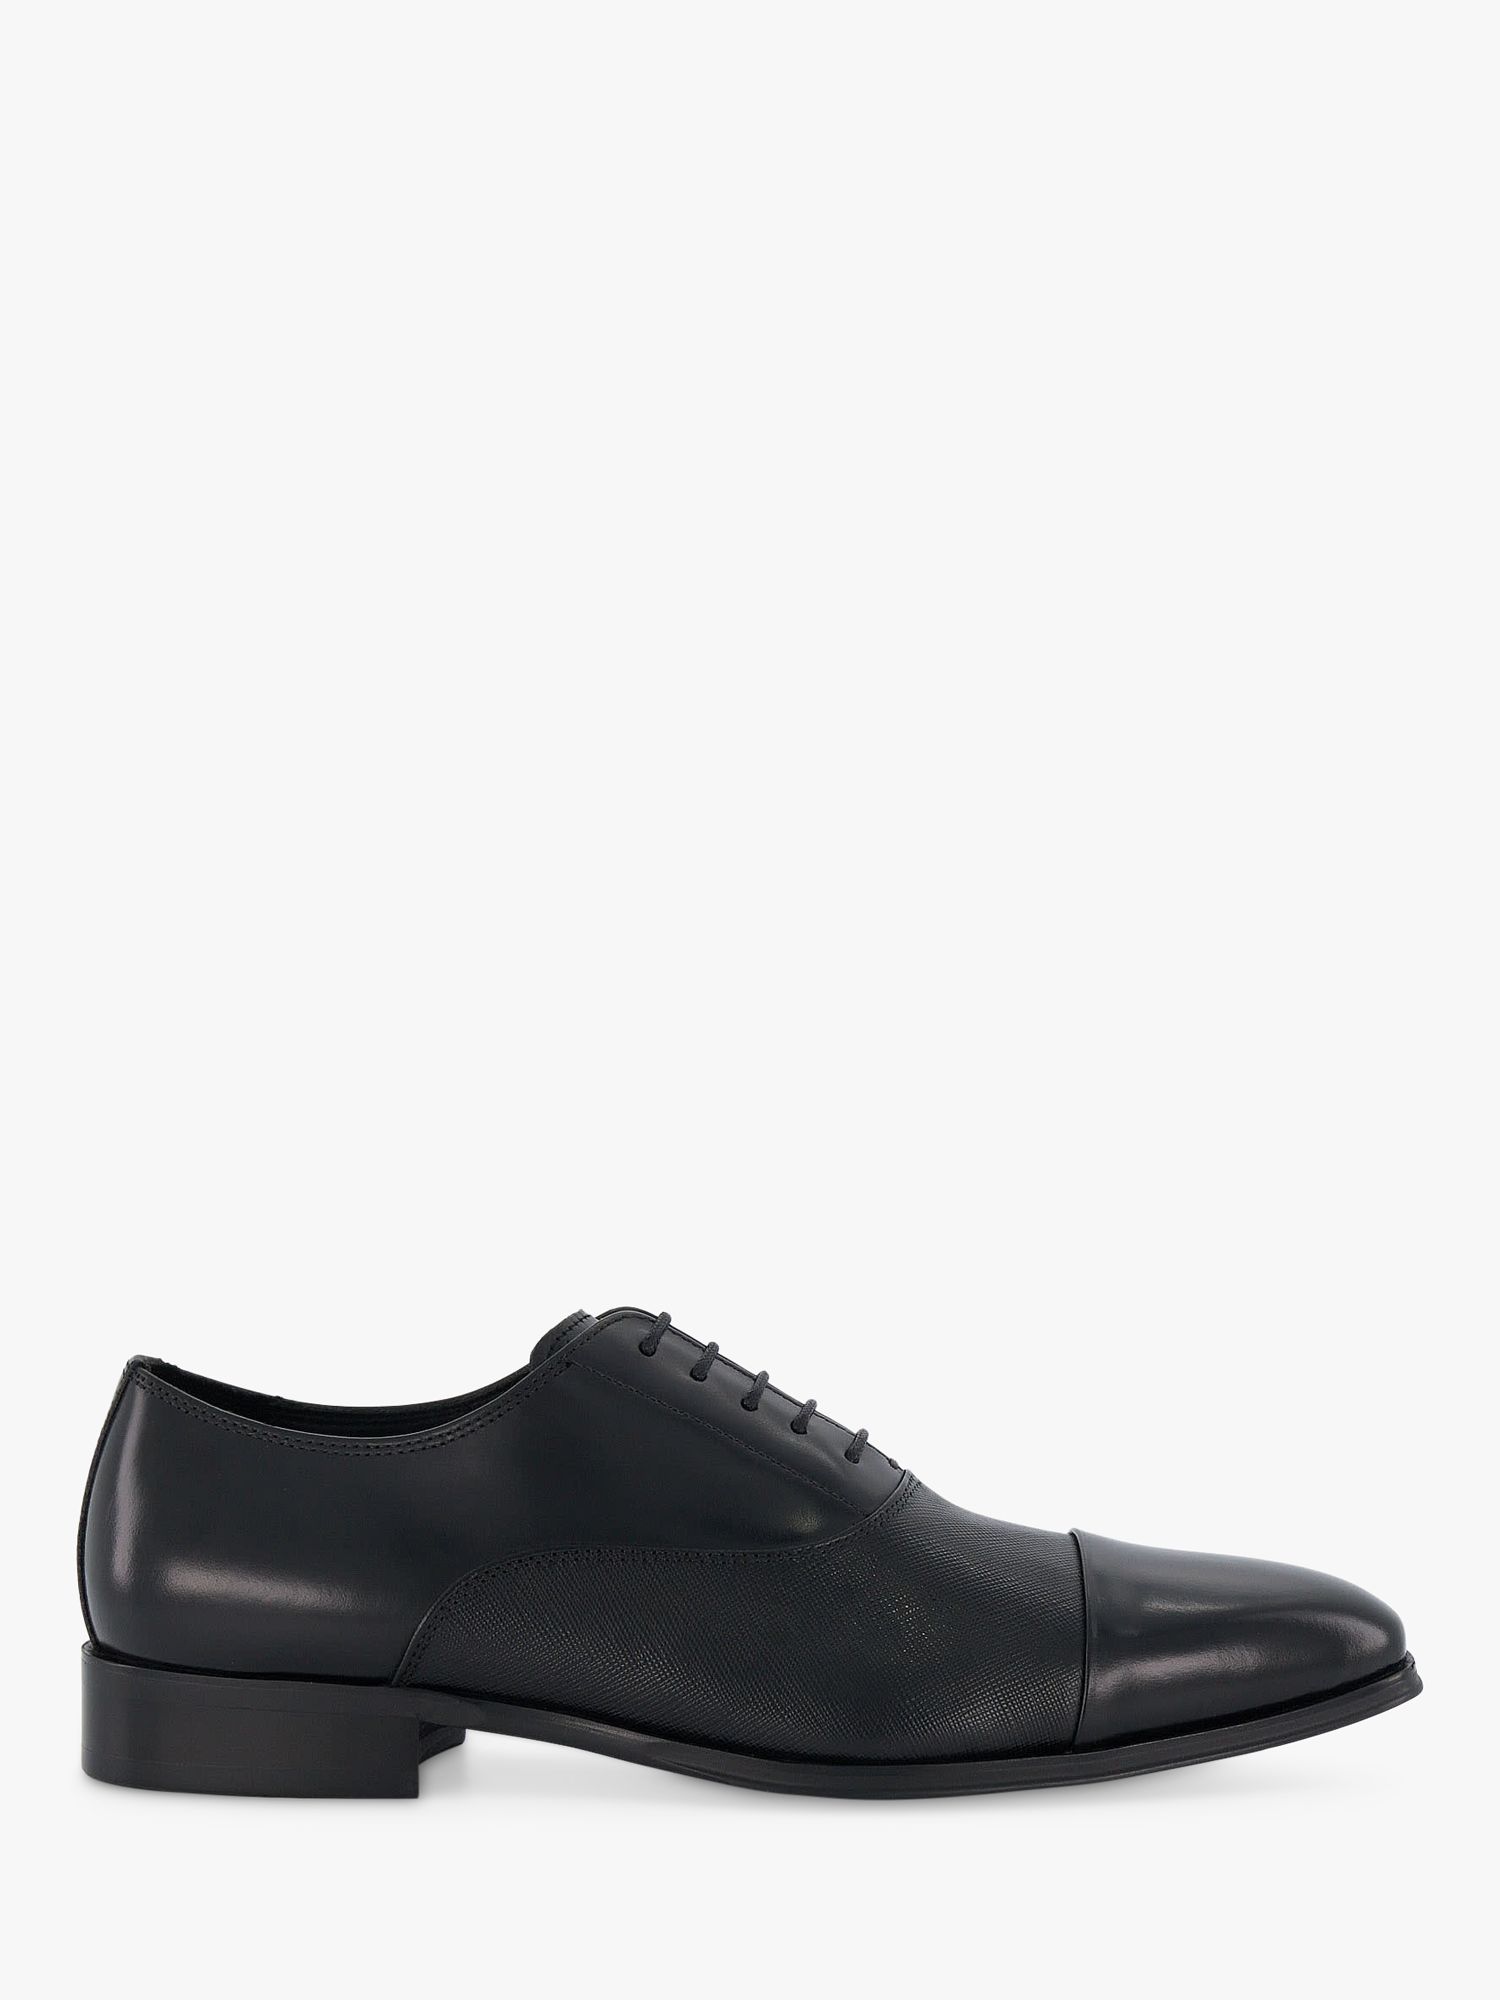 Dune Slating Leather Oxford Shoes, Black at John Lewis & Partners